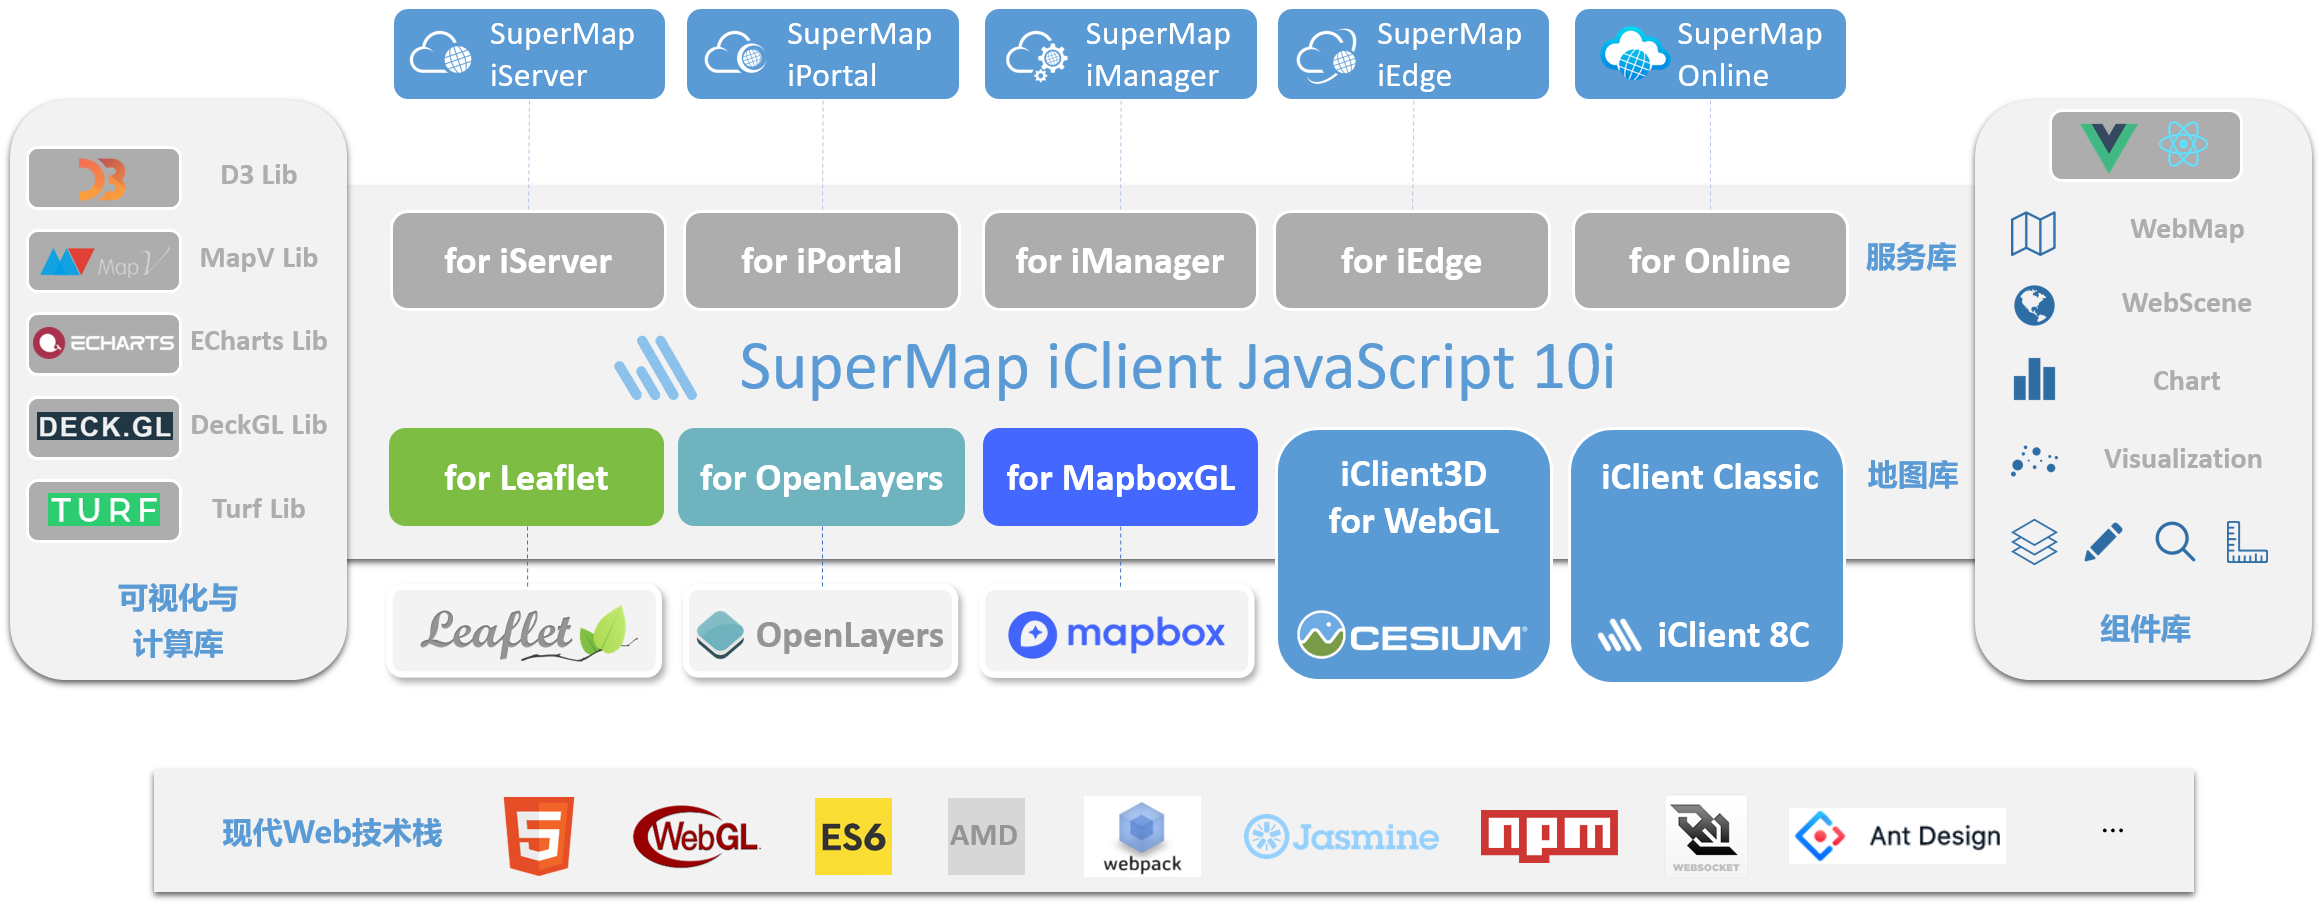 SuperMap iClient JavaScript 10i(2020) 产品概览